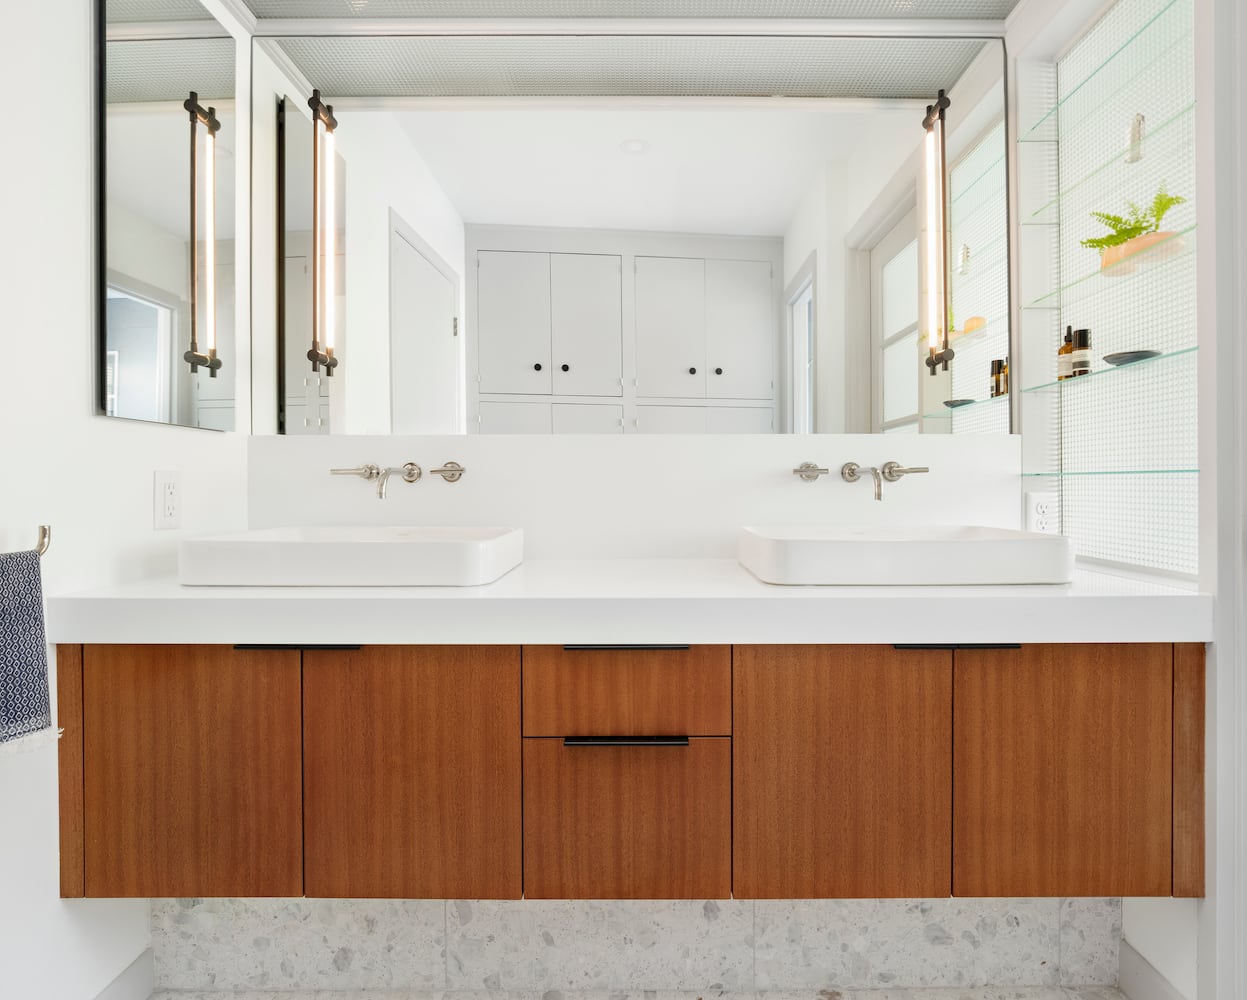 Bathroom with double vanity, vessel sinks, terrazzo tile, thin vanity lights